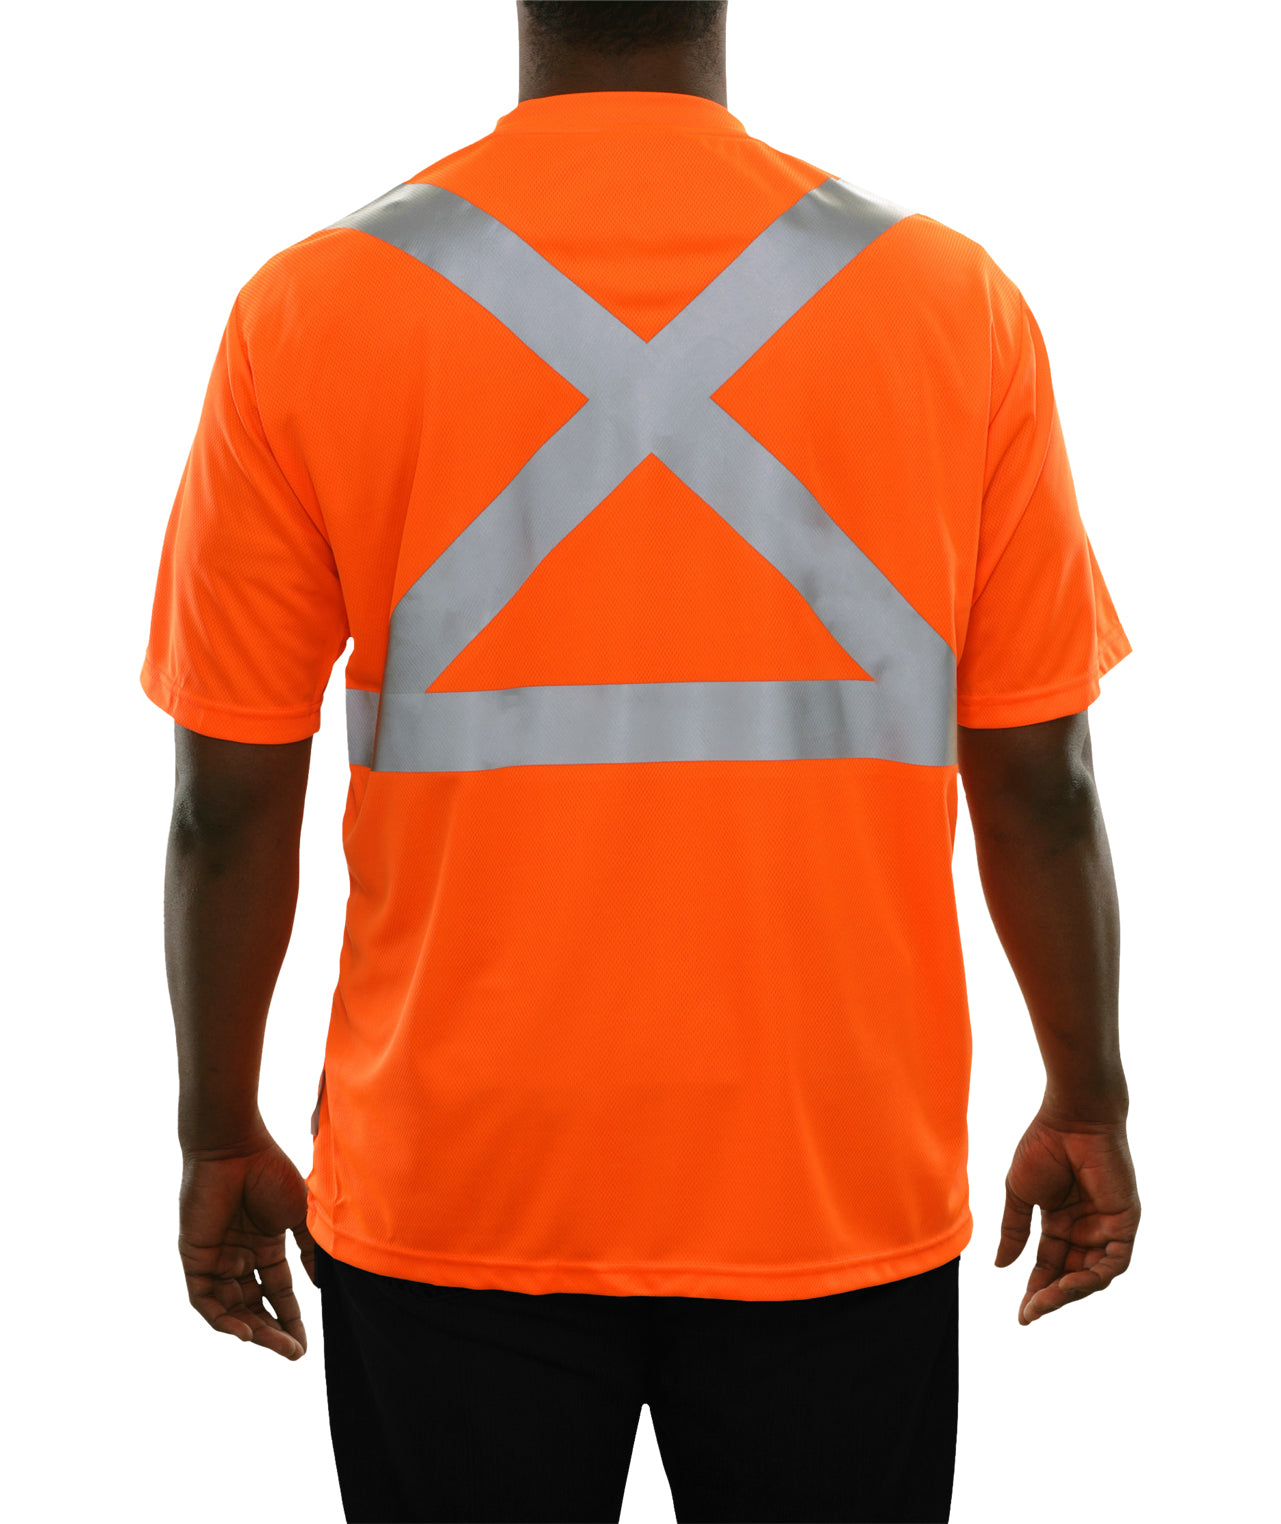 102SXOR Hi-Vis Orange Birdseye Pocket X-Back Safety Shirt